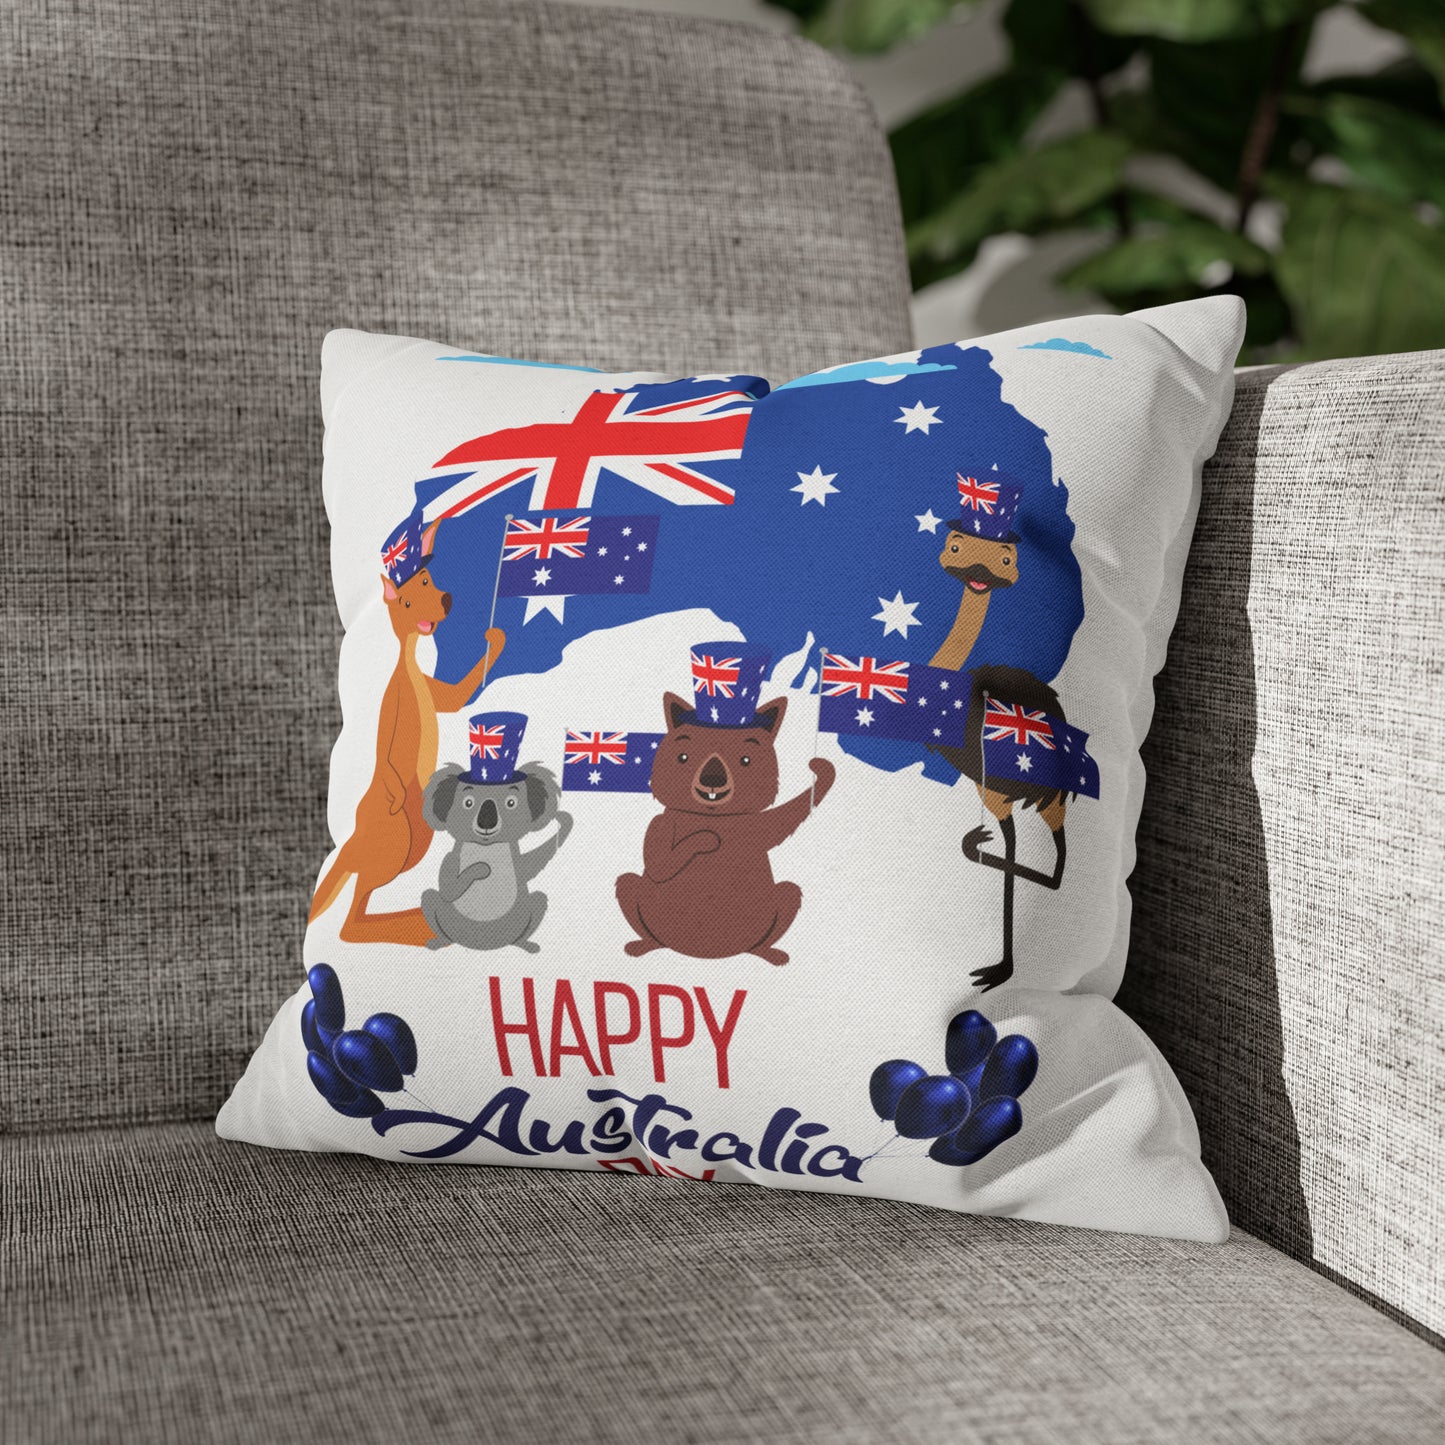 Australia Day Spun Polyester Square Pillow Case